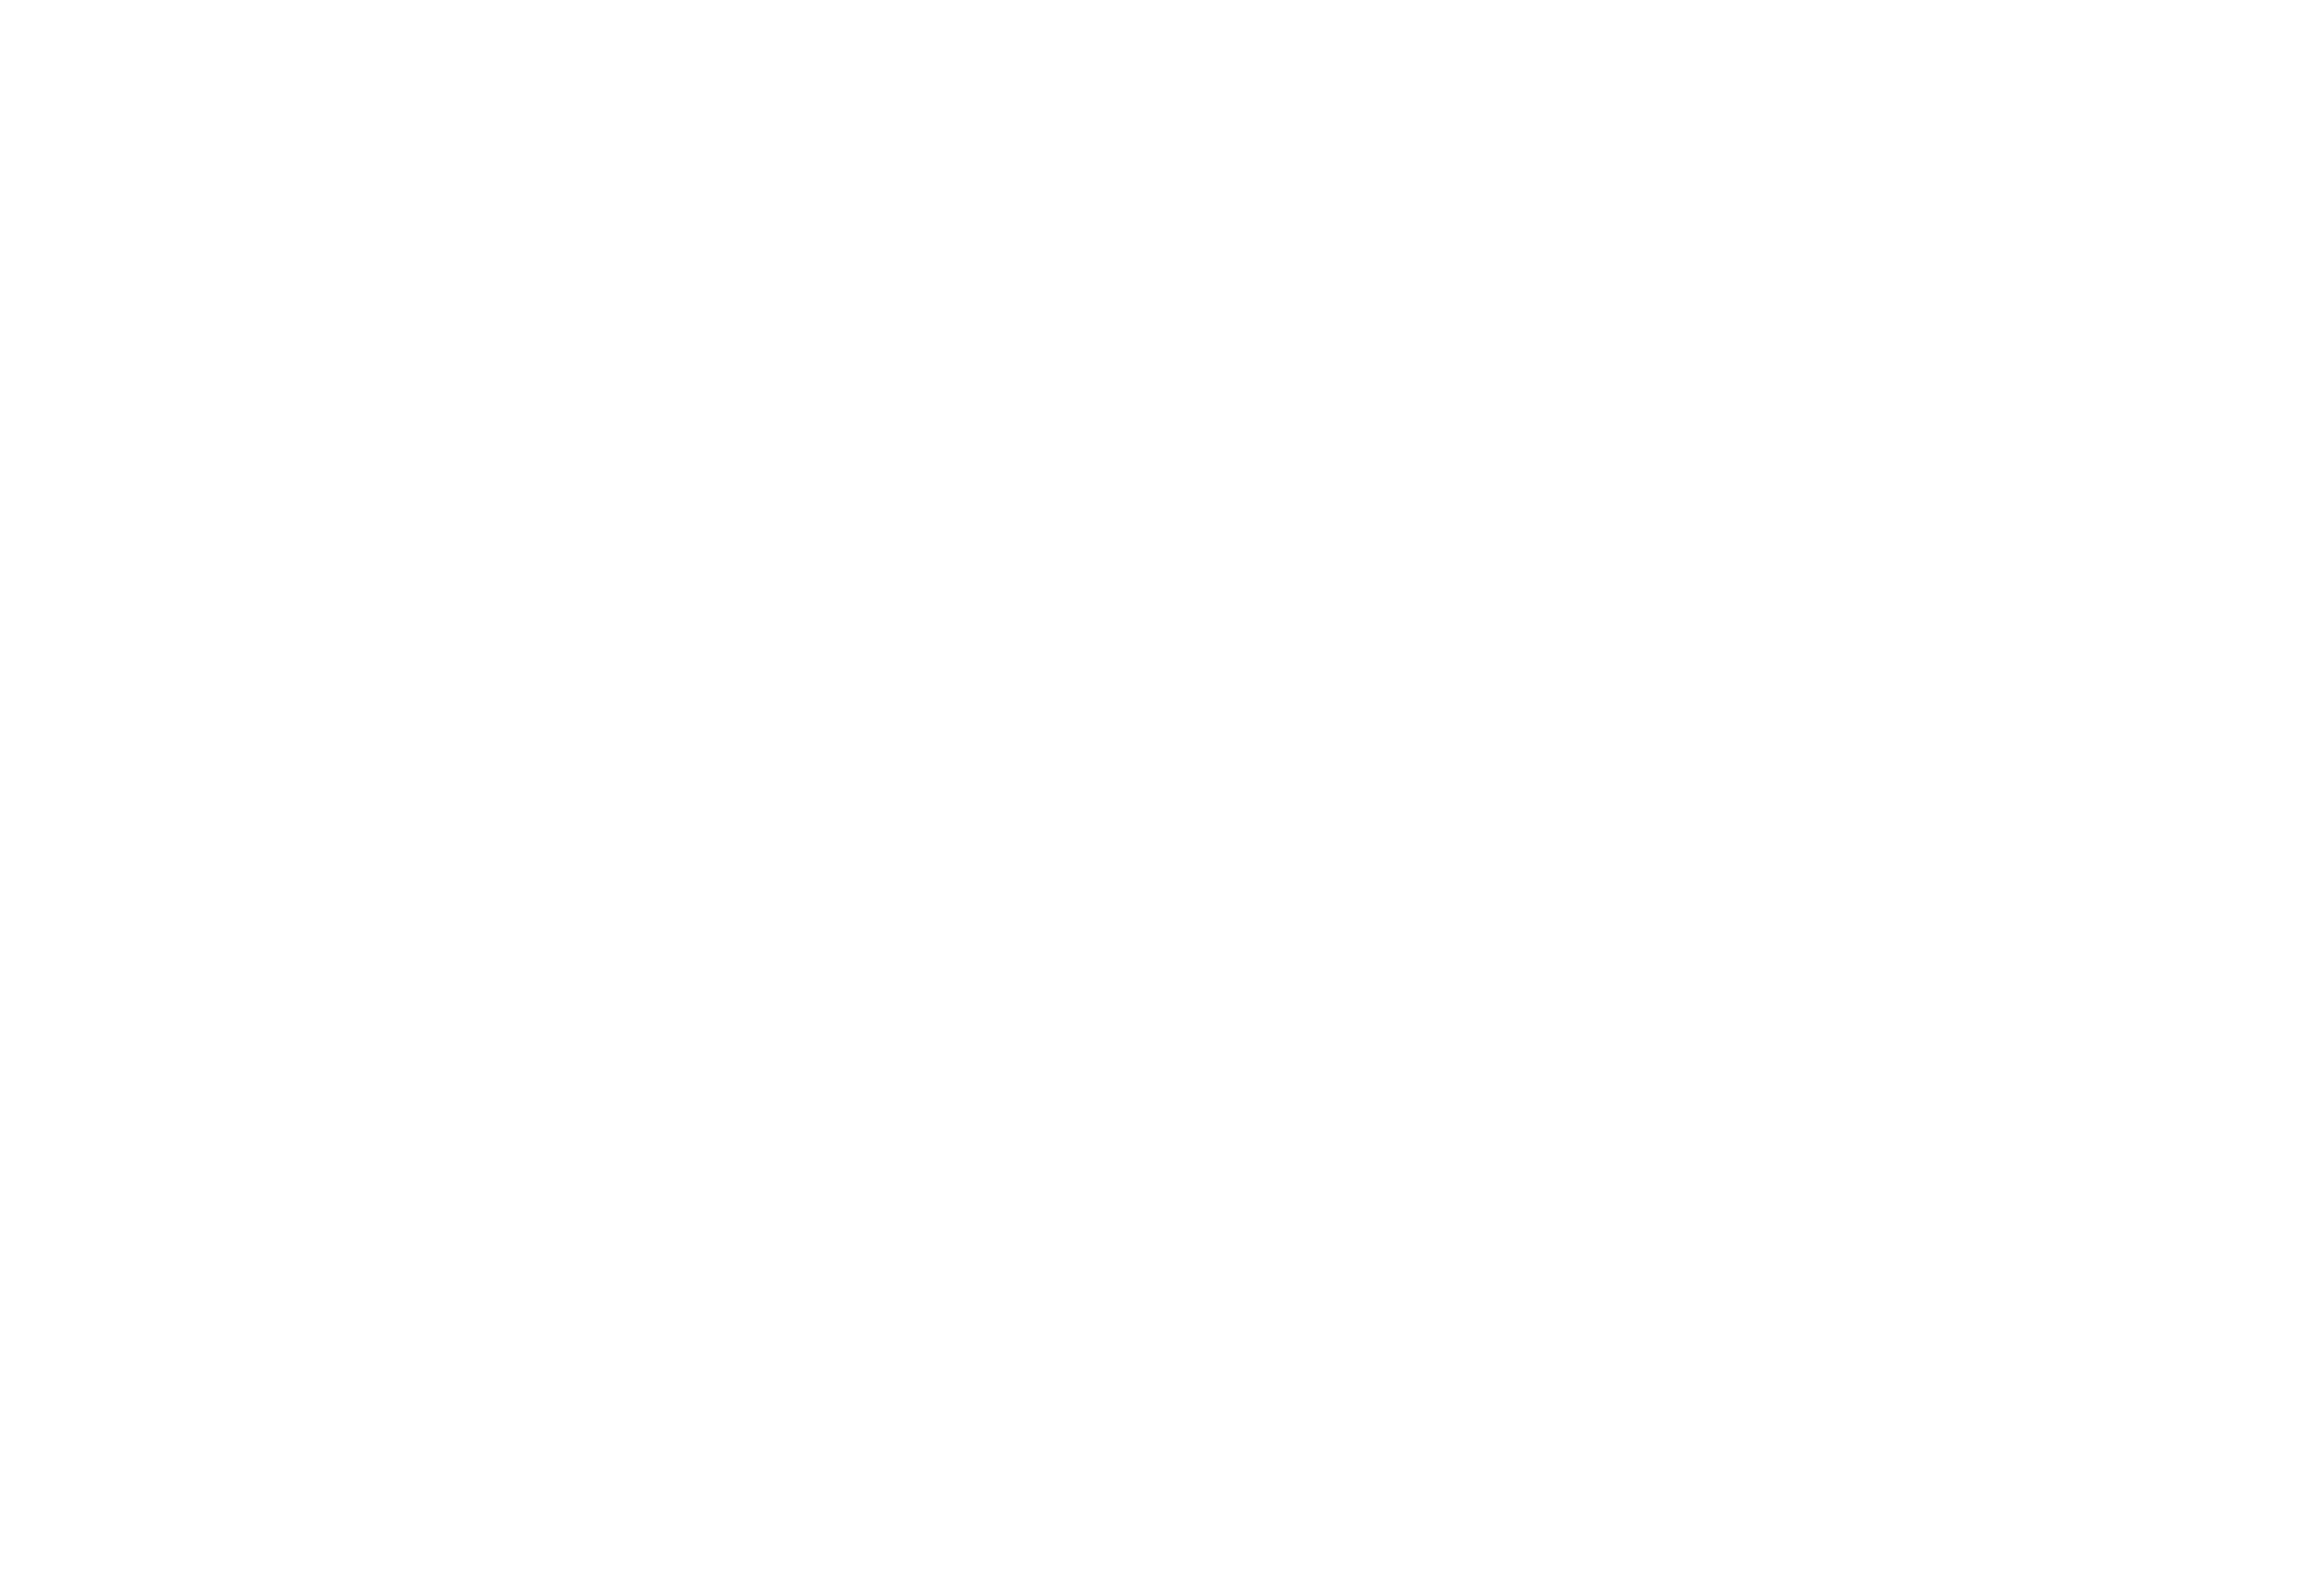 Logo The Miliare Group